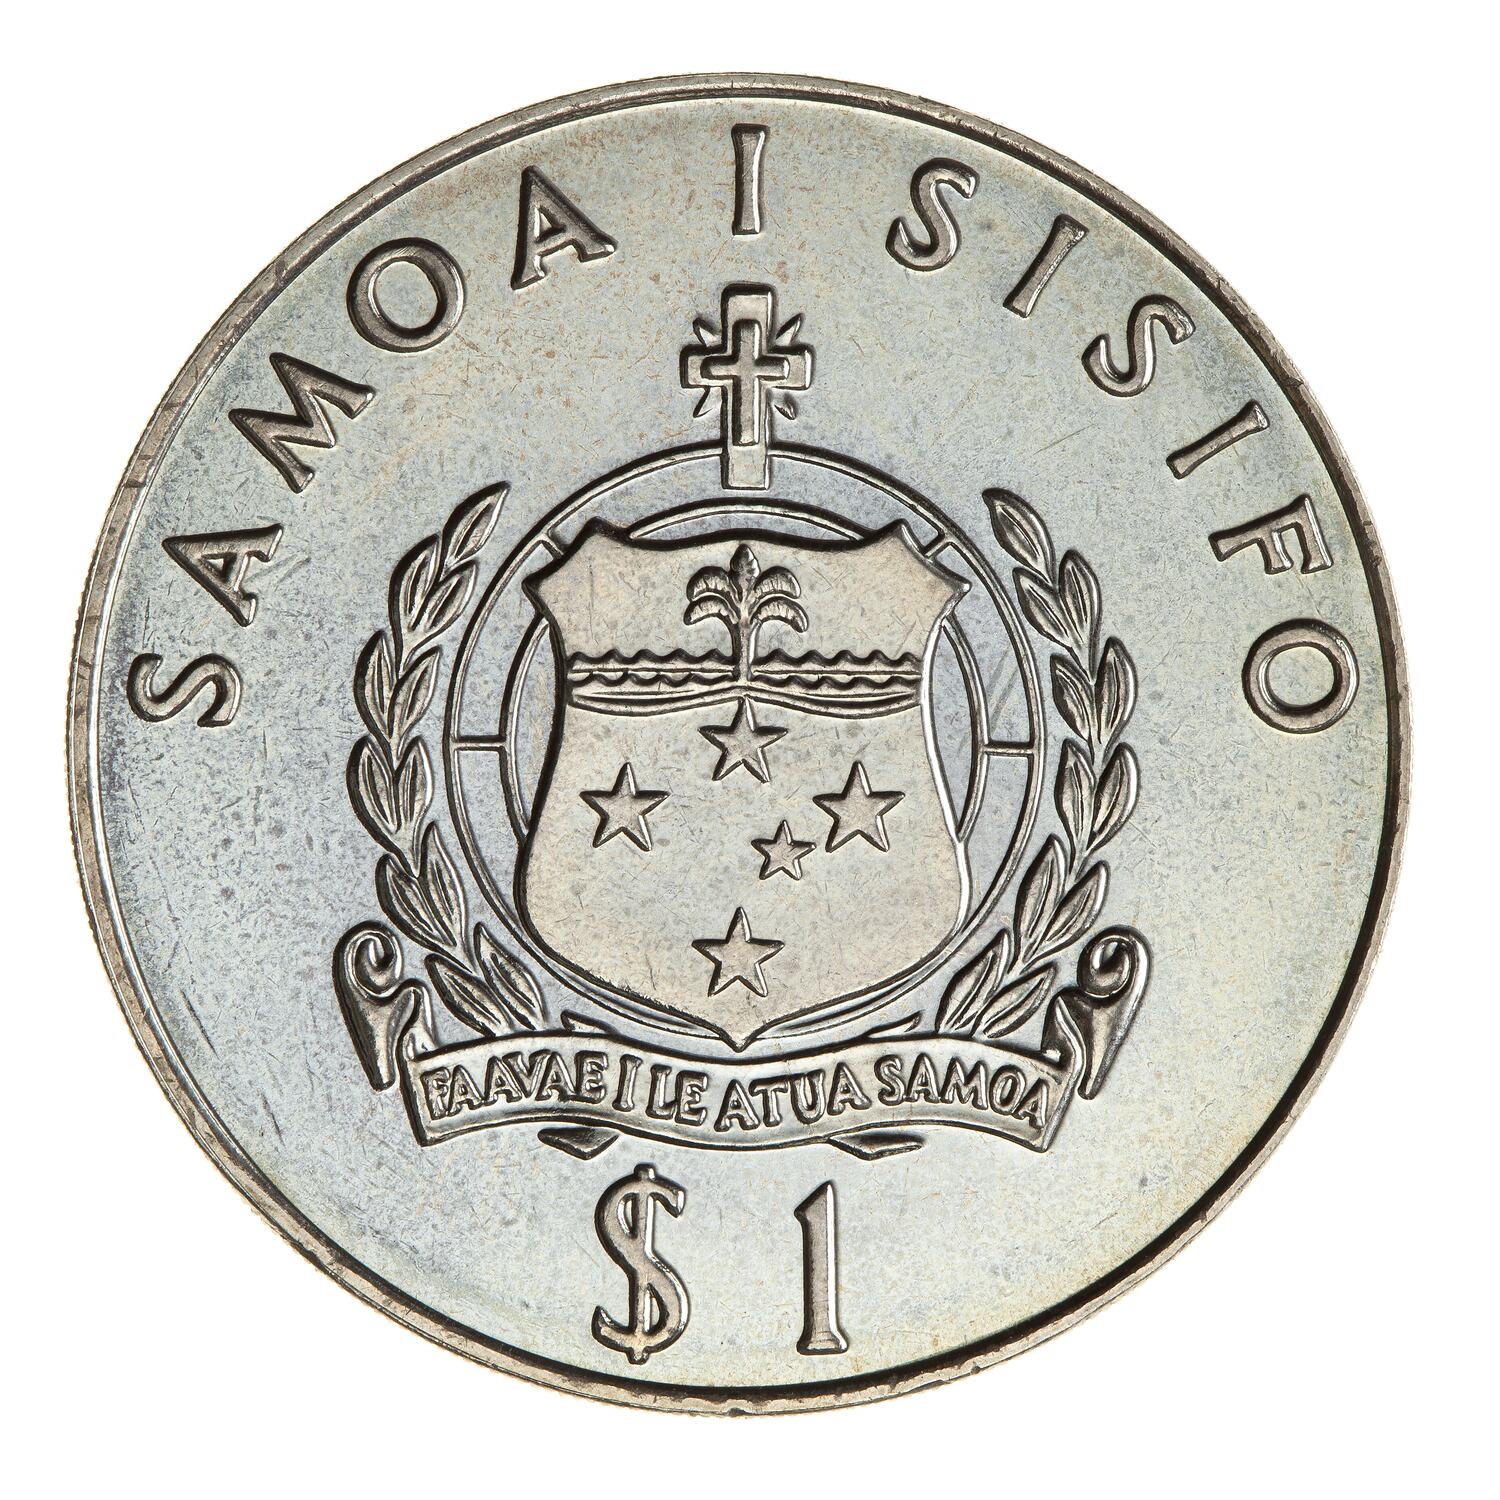 Coin - 1 Tala, Wilhelm Solf, Governor, Samoa, 1980